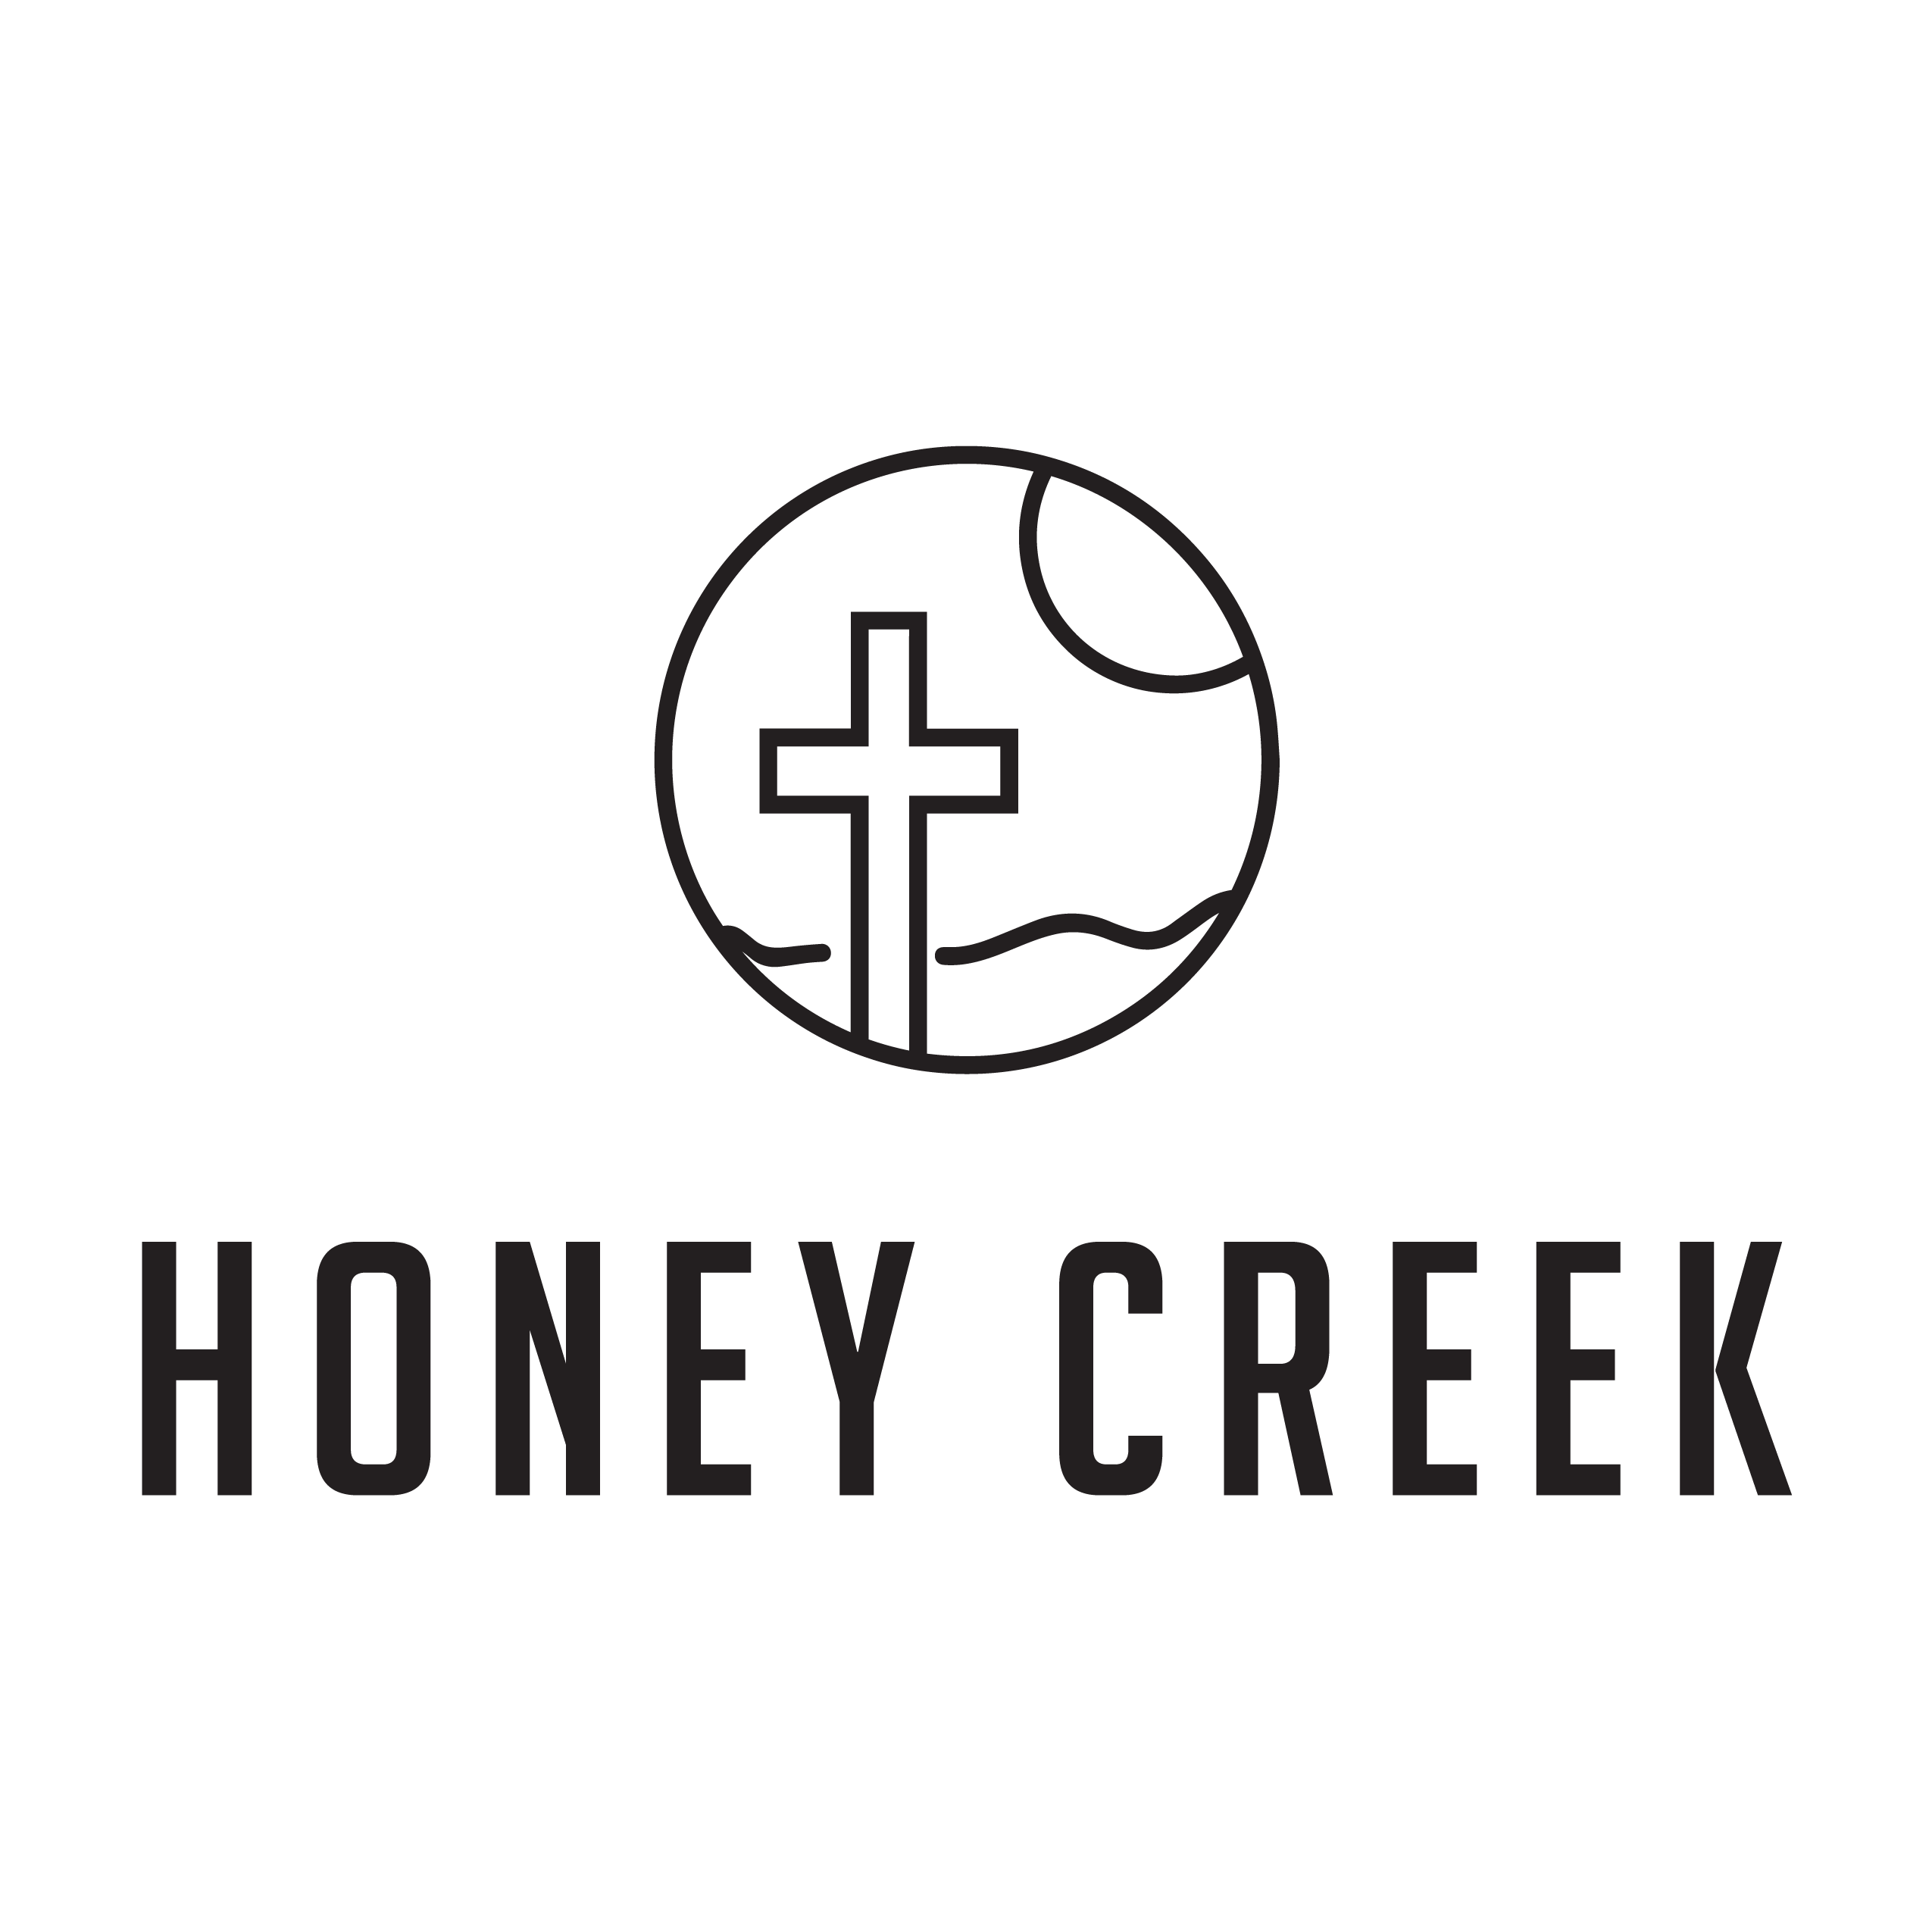 Honey Creek Commission / Meeting